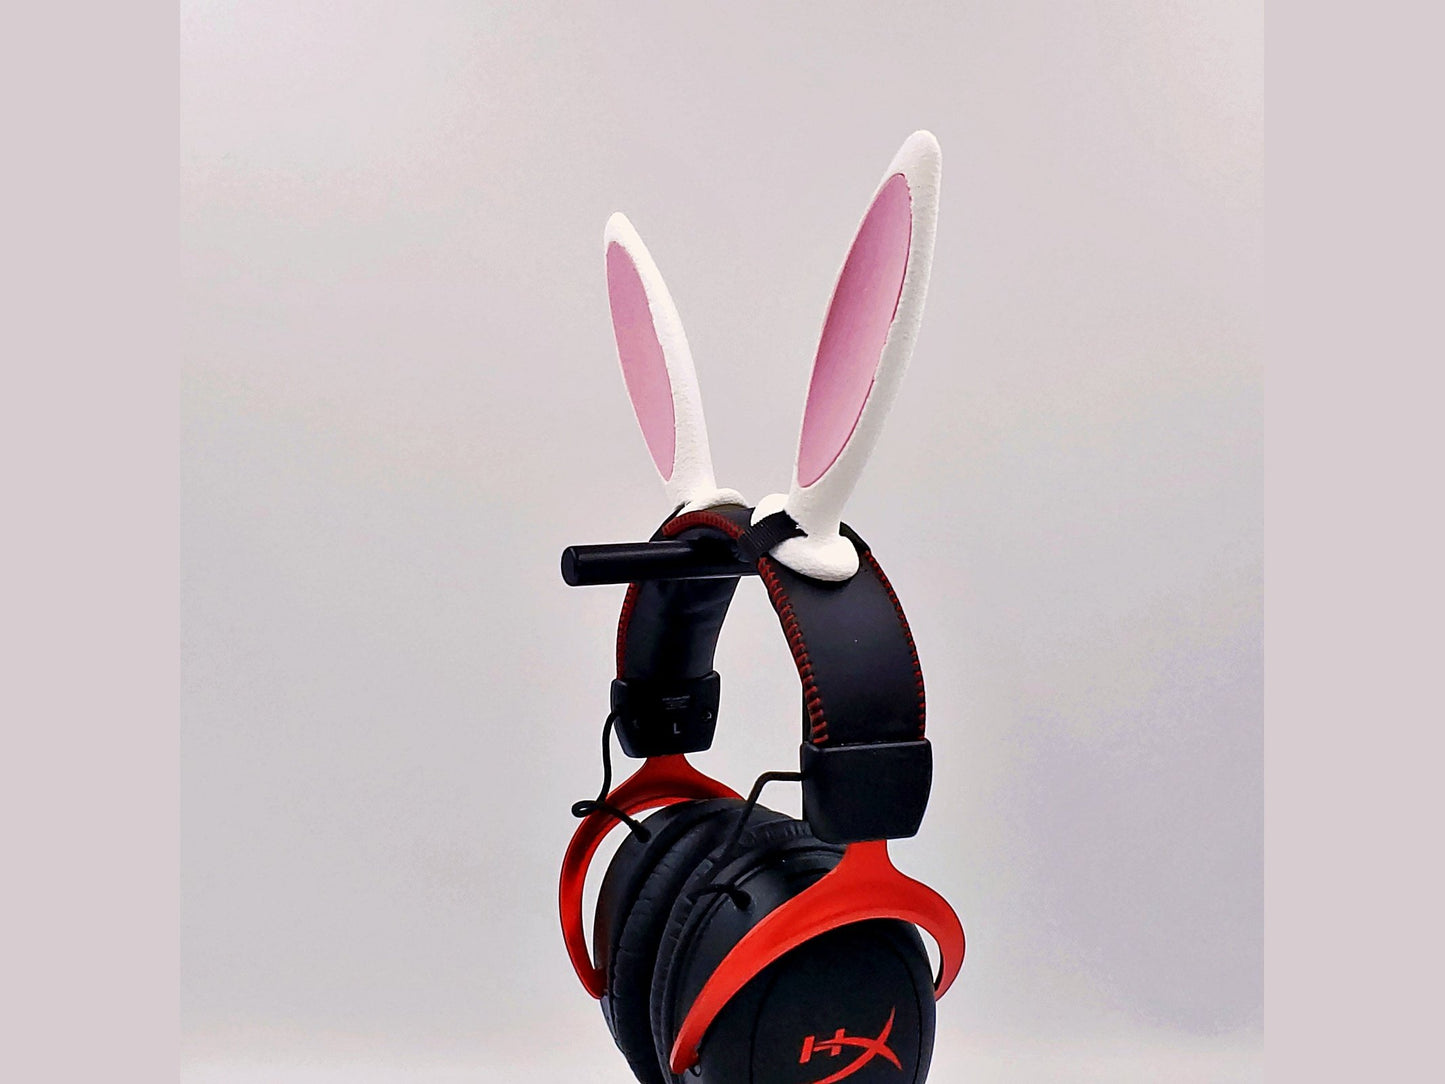 Bunny Rabbit Ears Headset Attachment